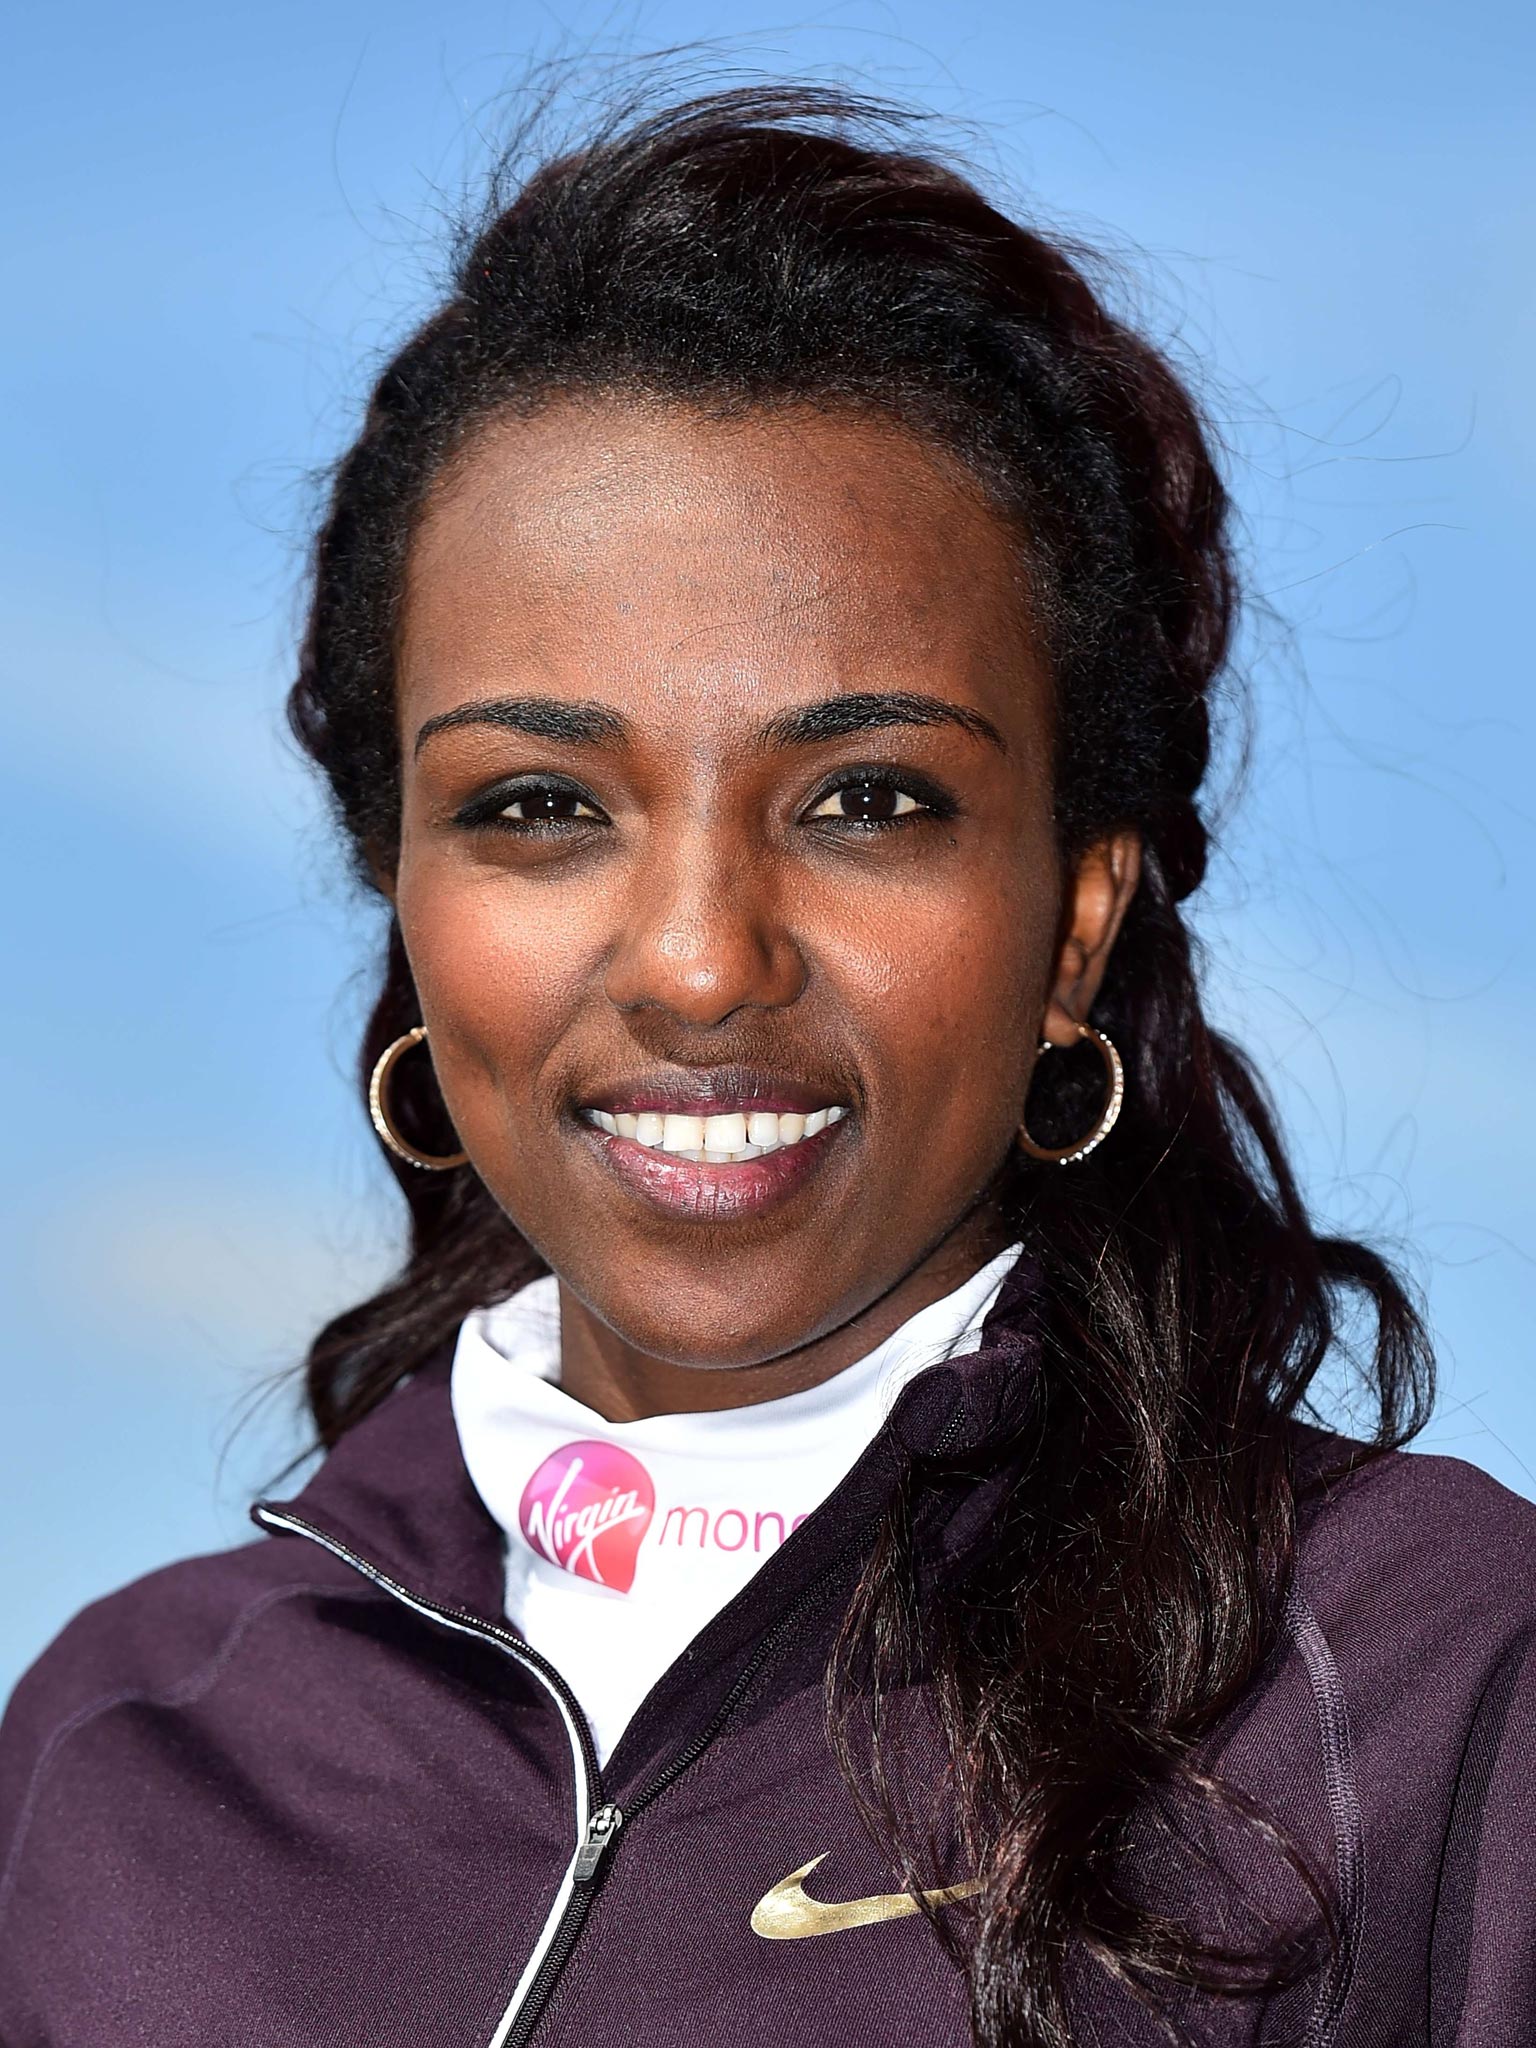 Triple Olympic middle-distance champion Tirunesh Dibaba also runs
her first marathon on Sunday